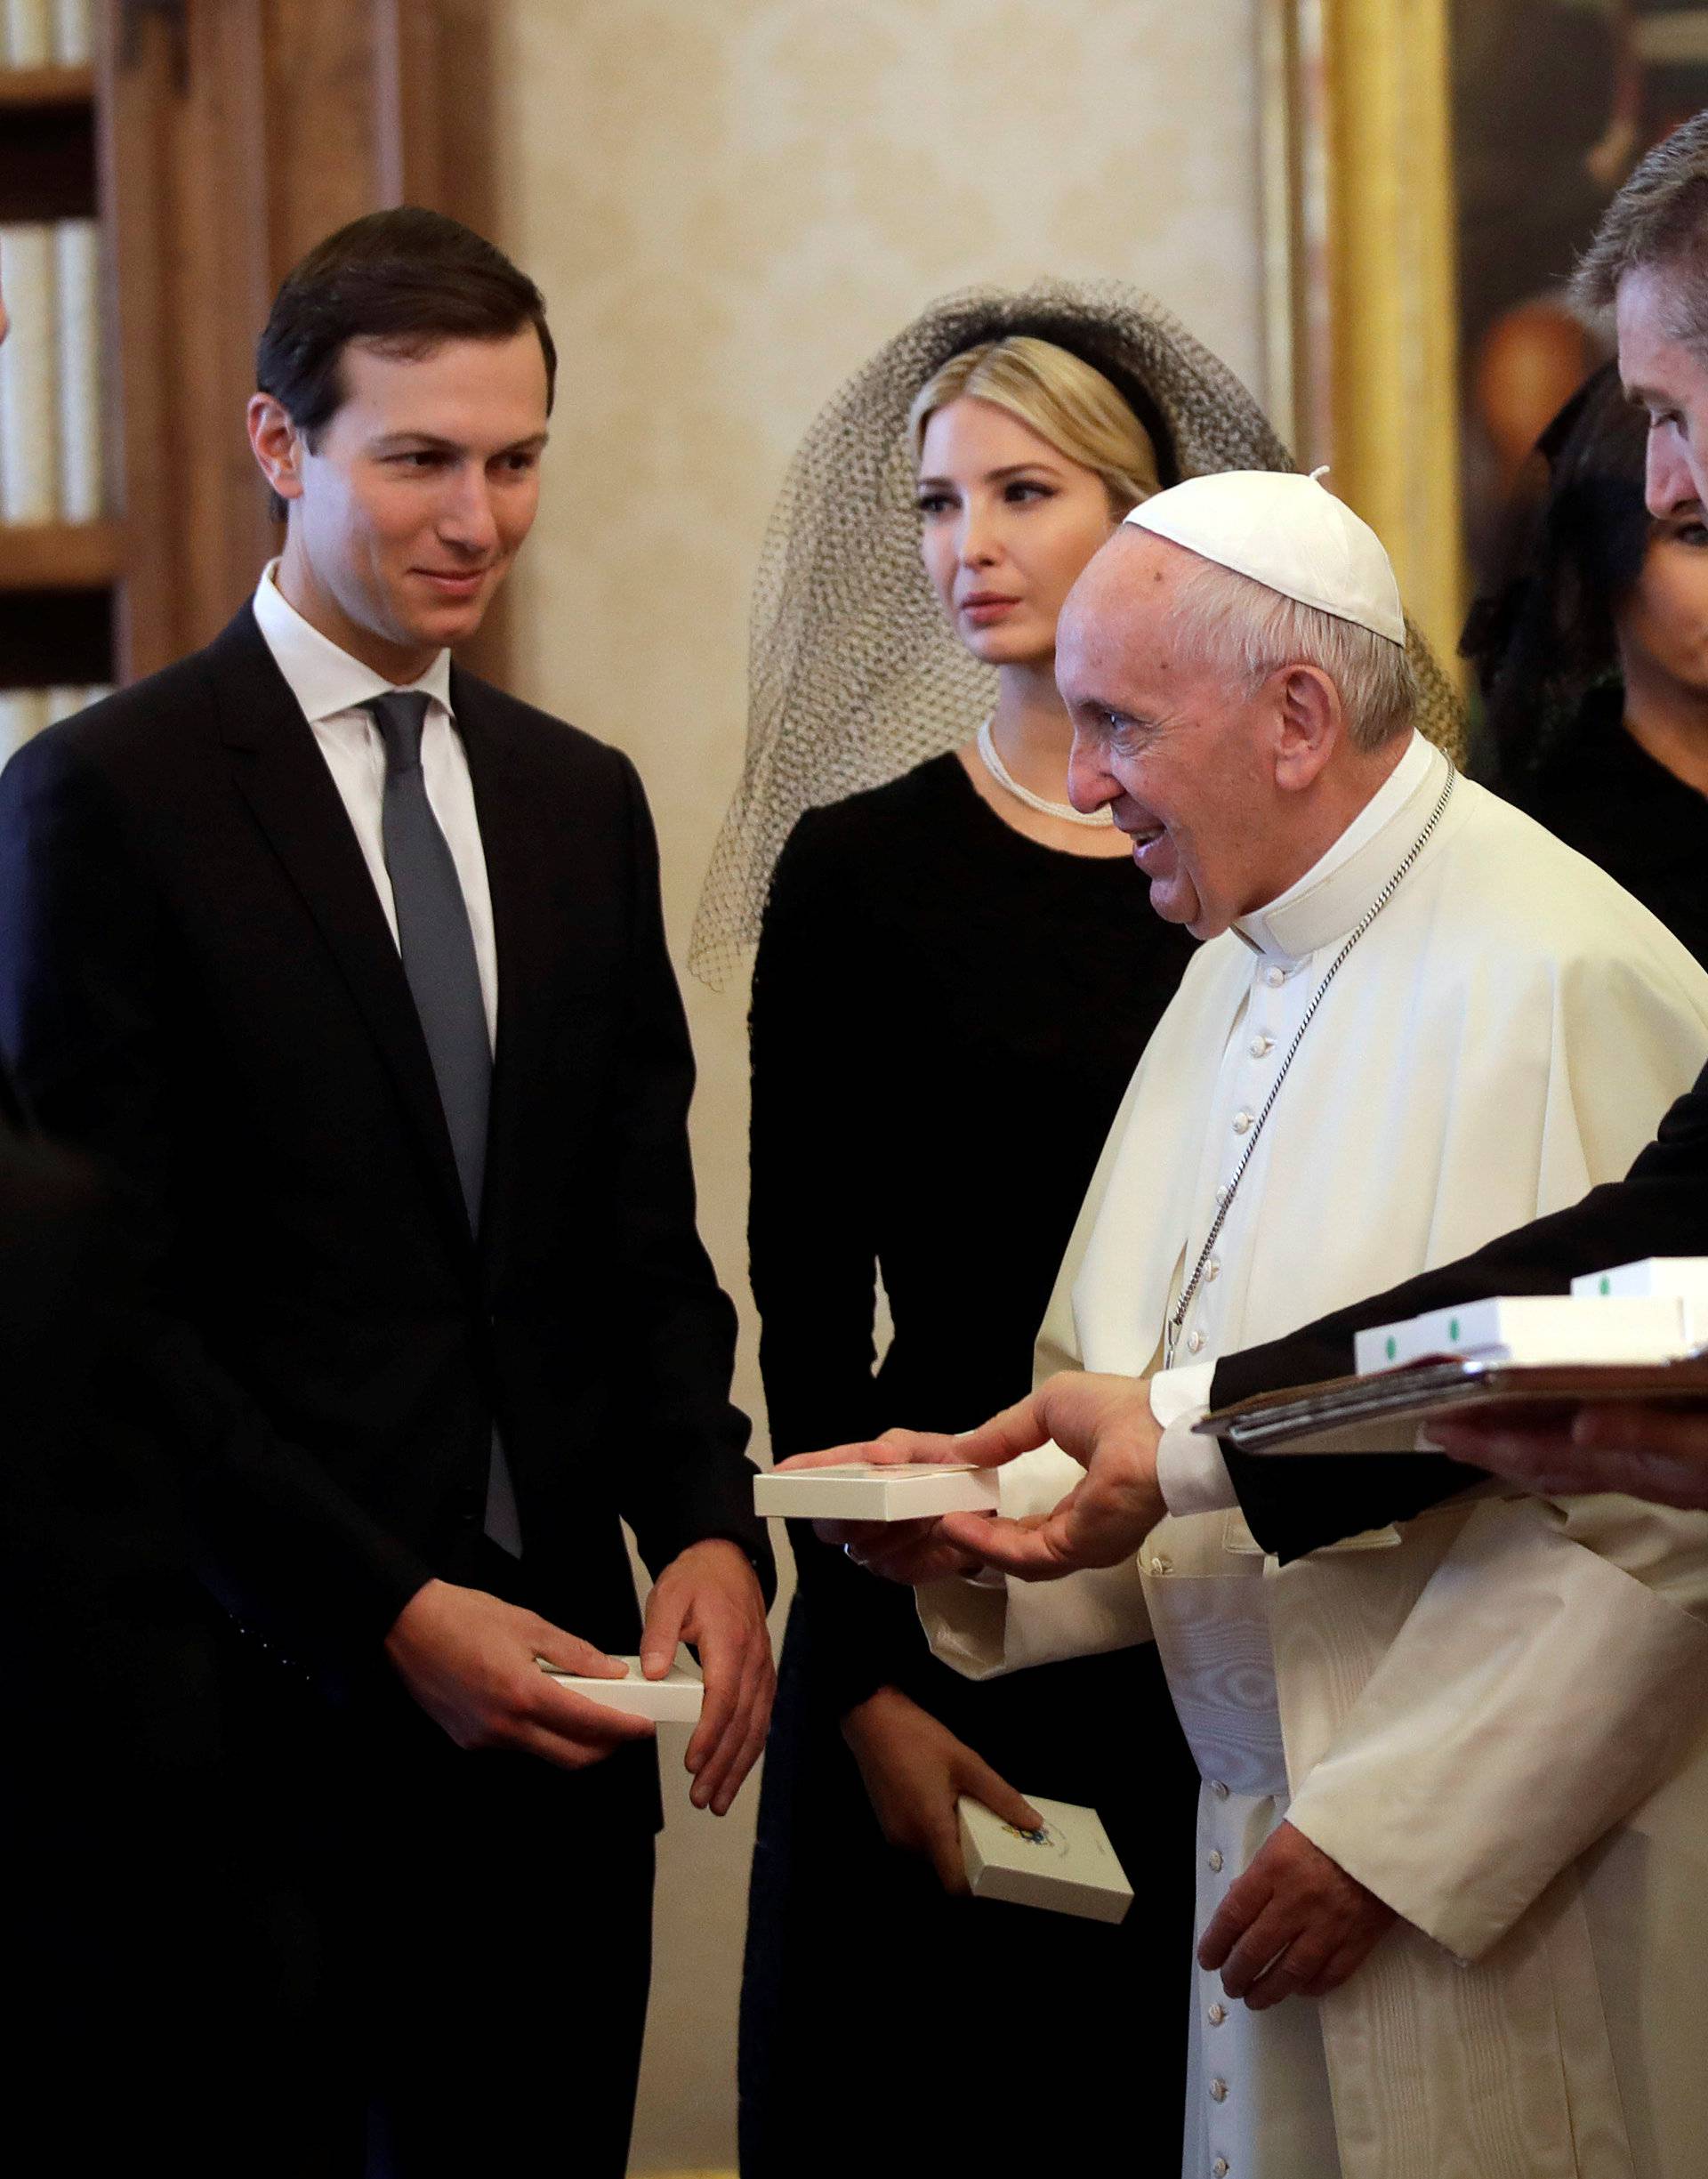 Pope Francis walks past Jared Kushner senior advisor of President Donald Trump, Ivanka Trump, Melania Trump and President Donald Trump during a private audience at the Vatican